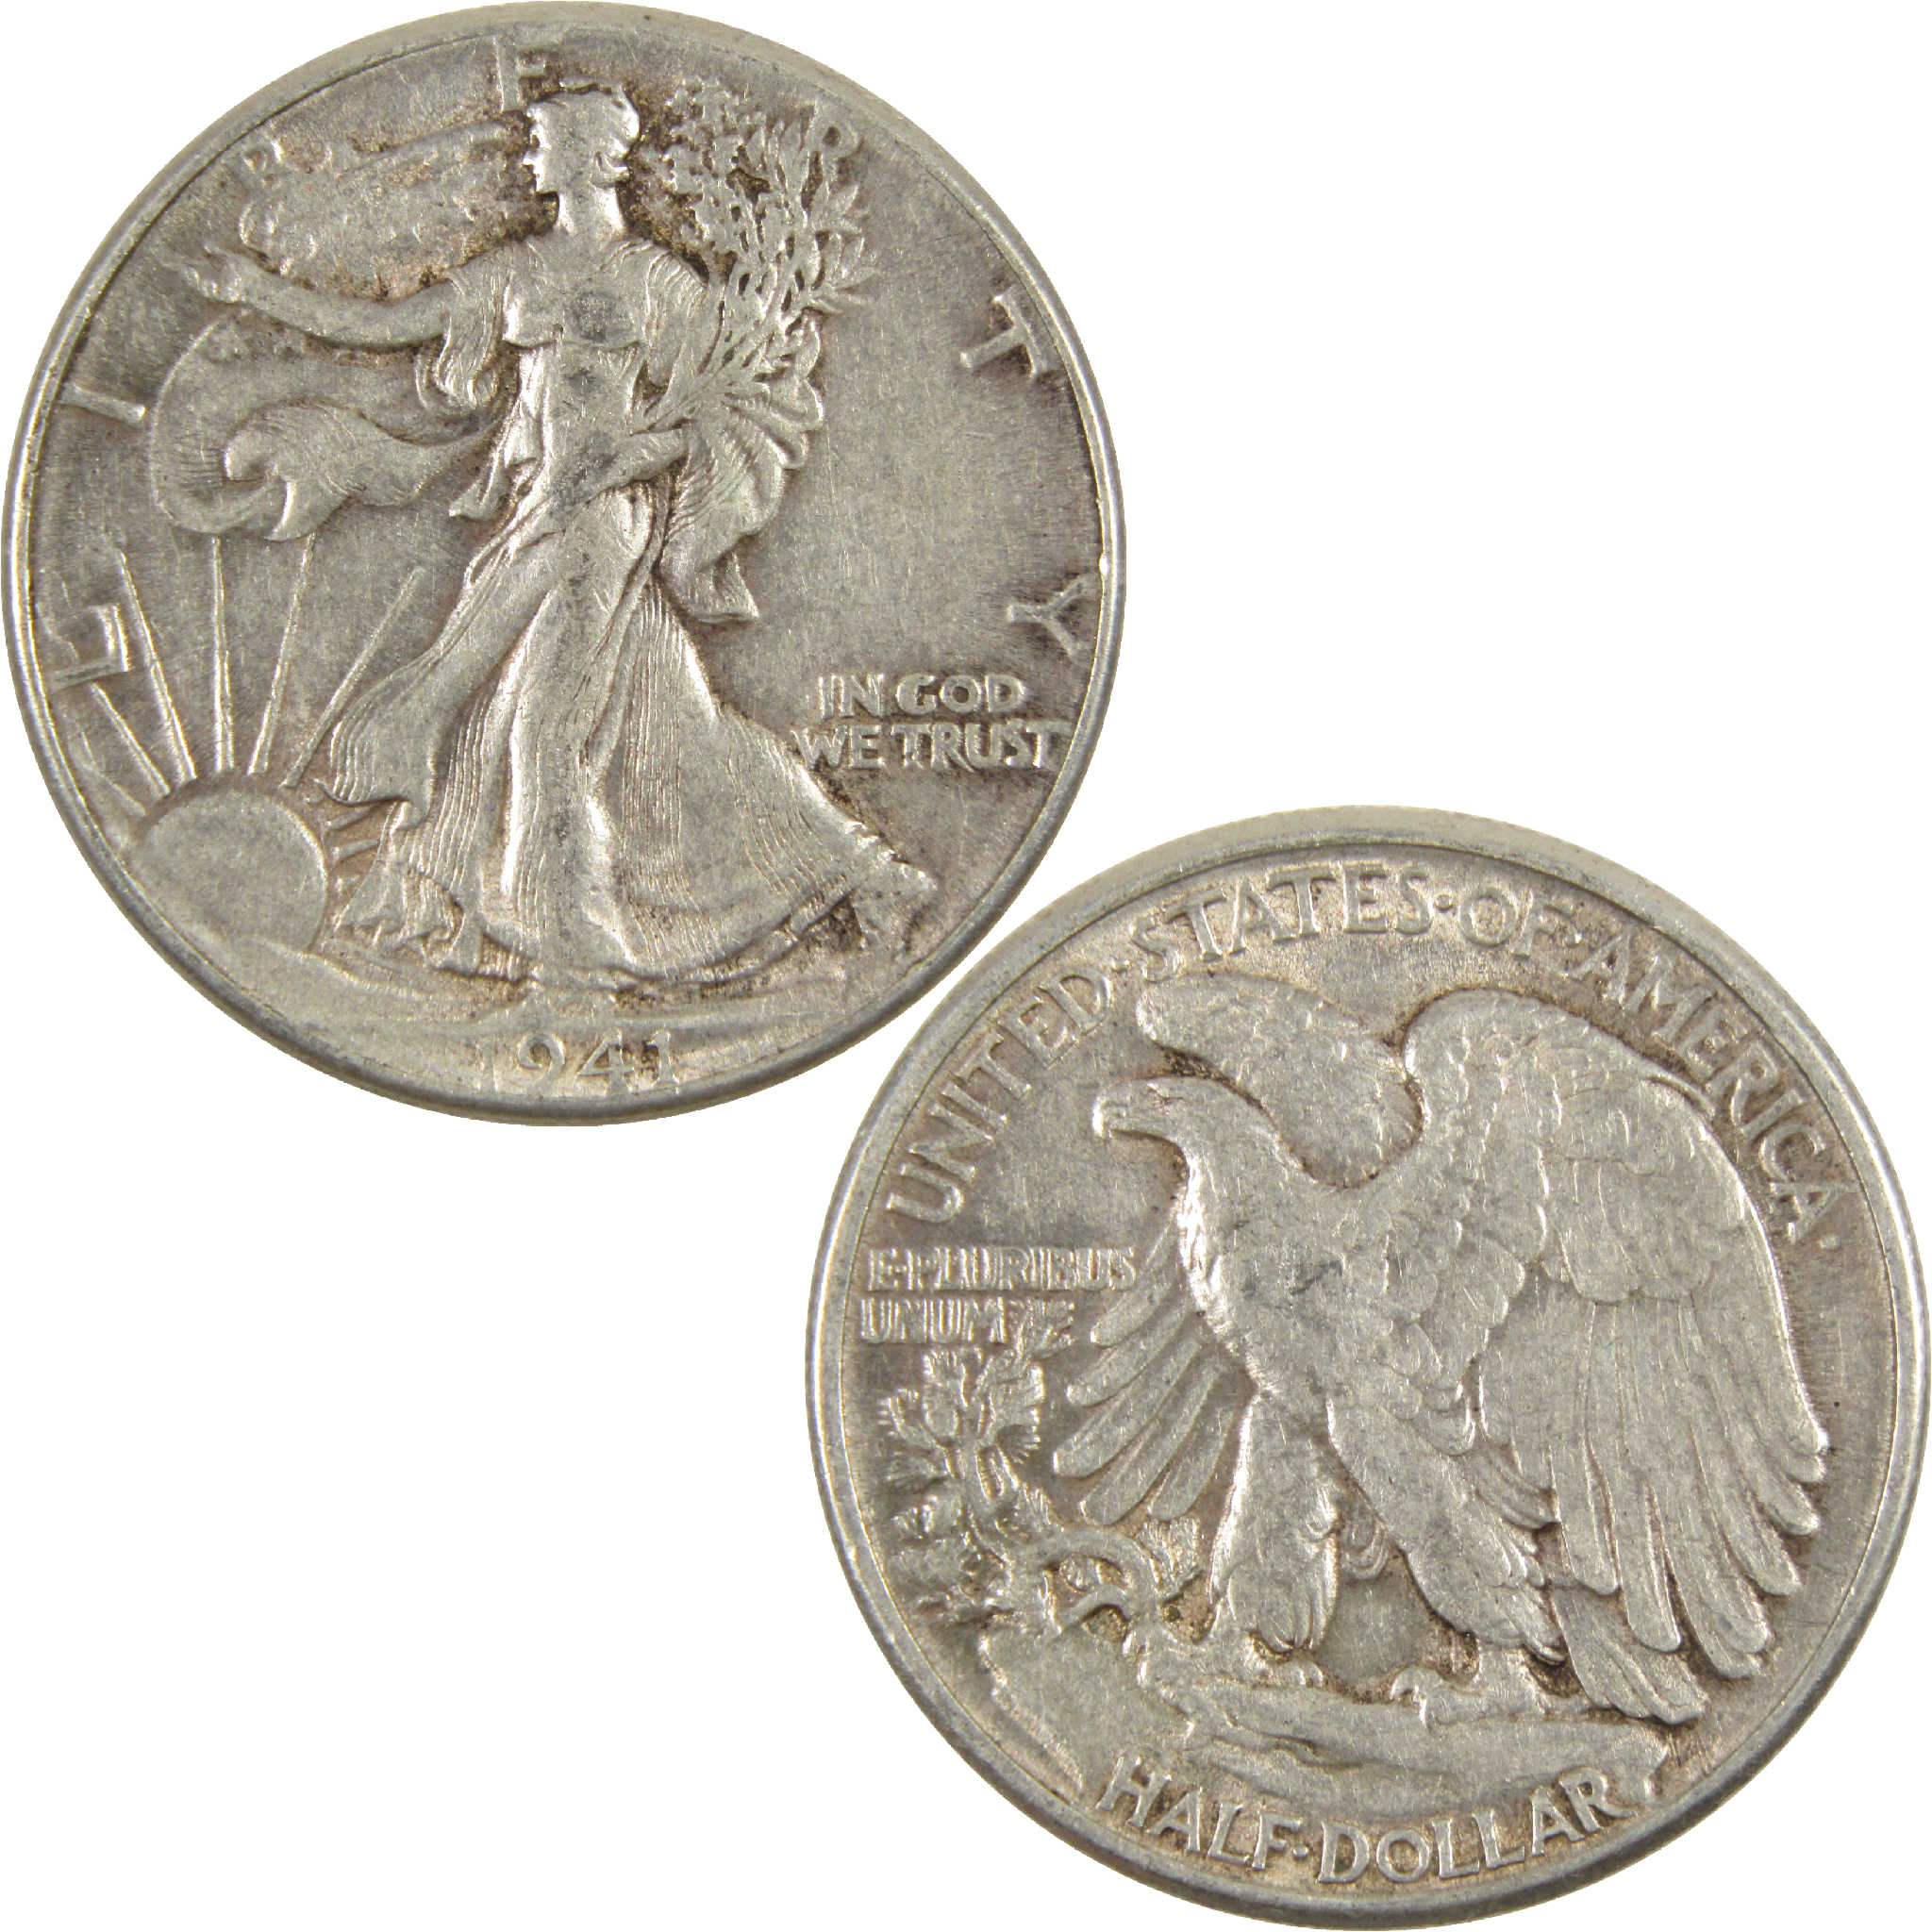 1941 Liberty Walking Half Dollar VF Very Fine Silver 50c Coin